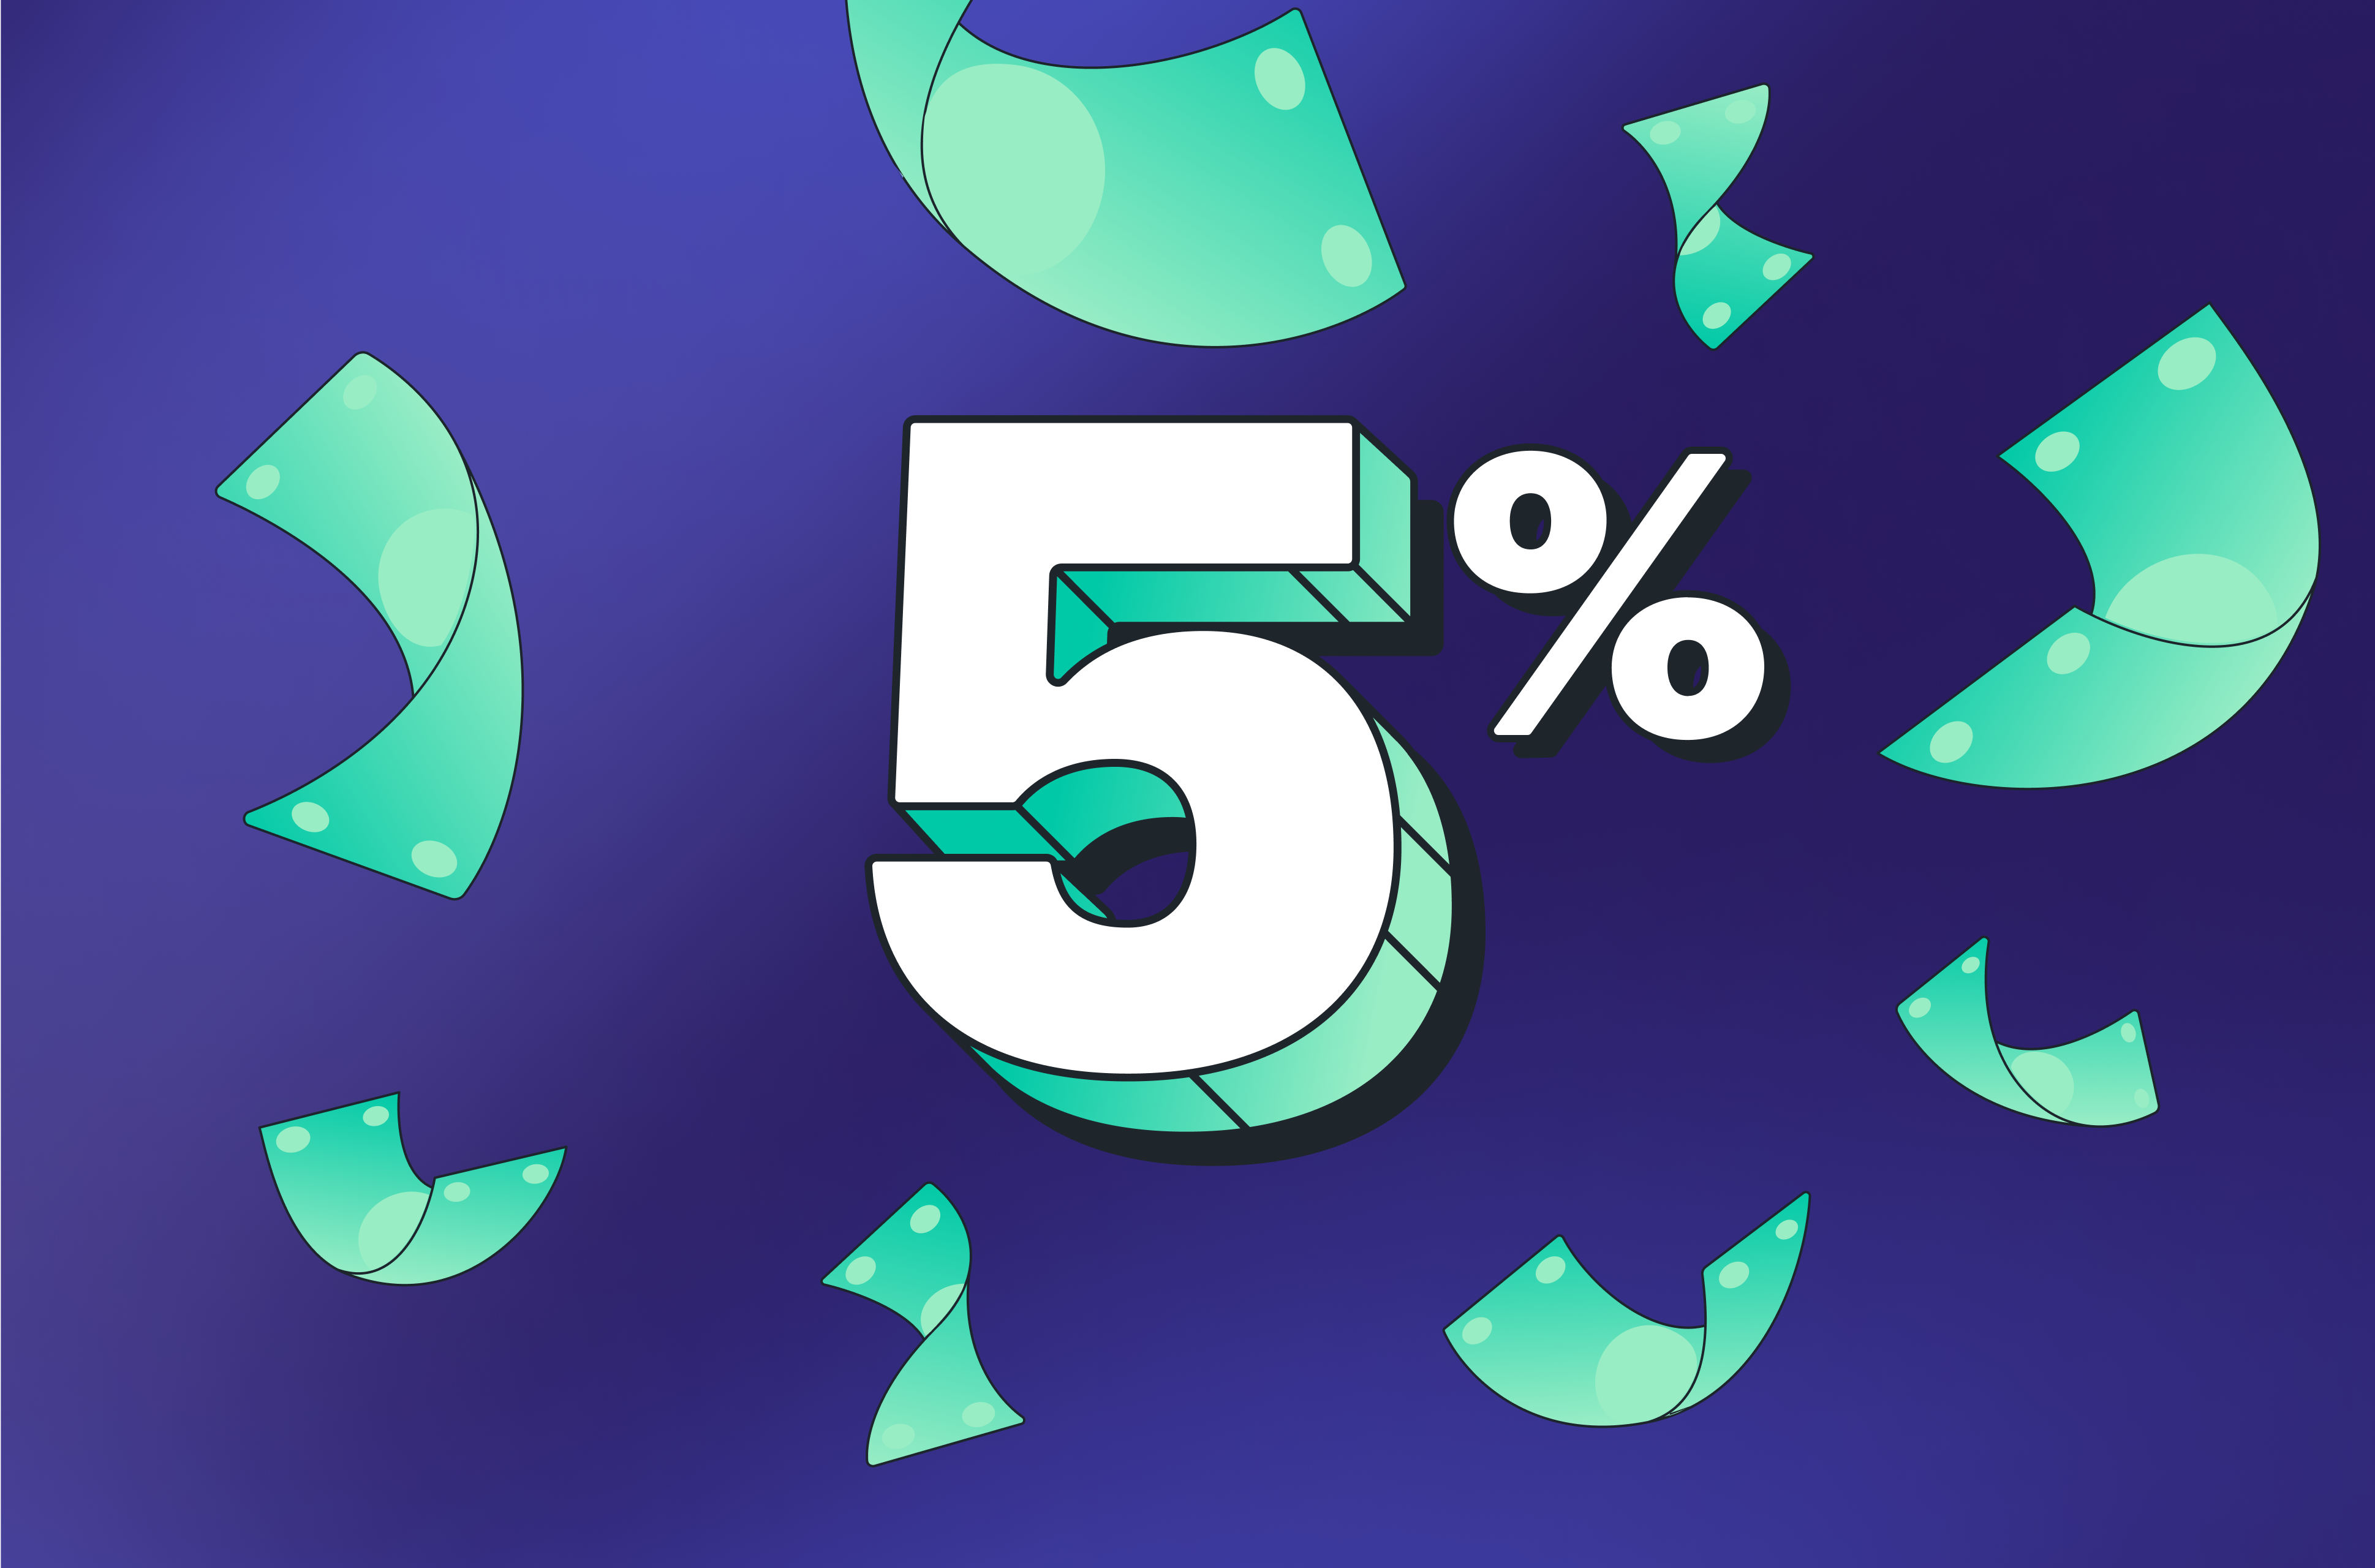 Big 5% interest logo against purple screen and green dollar bills for Greenlight's Savings Reward